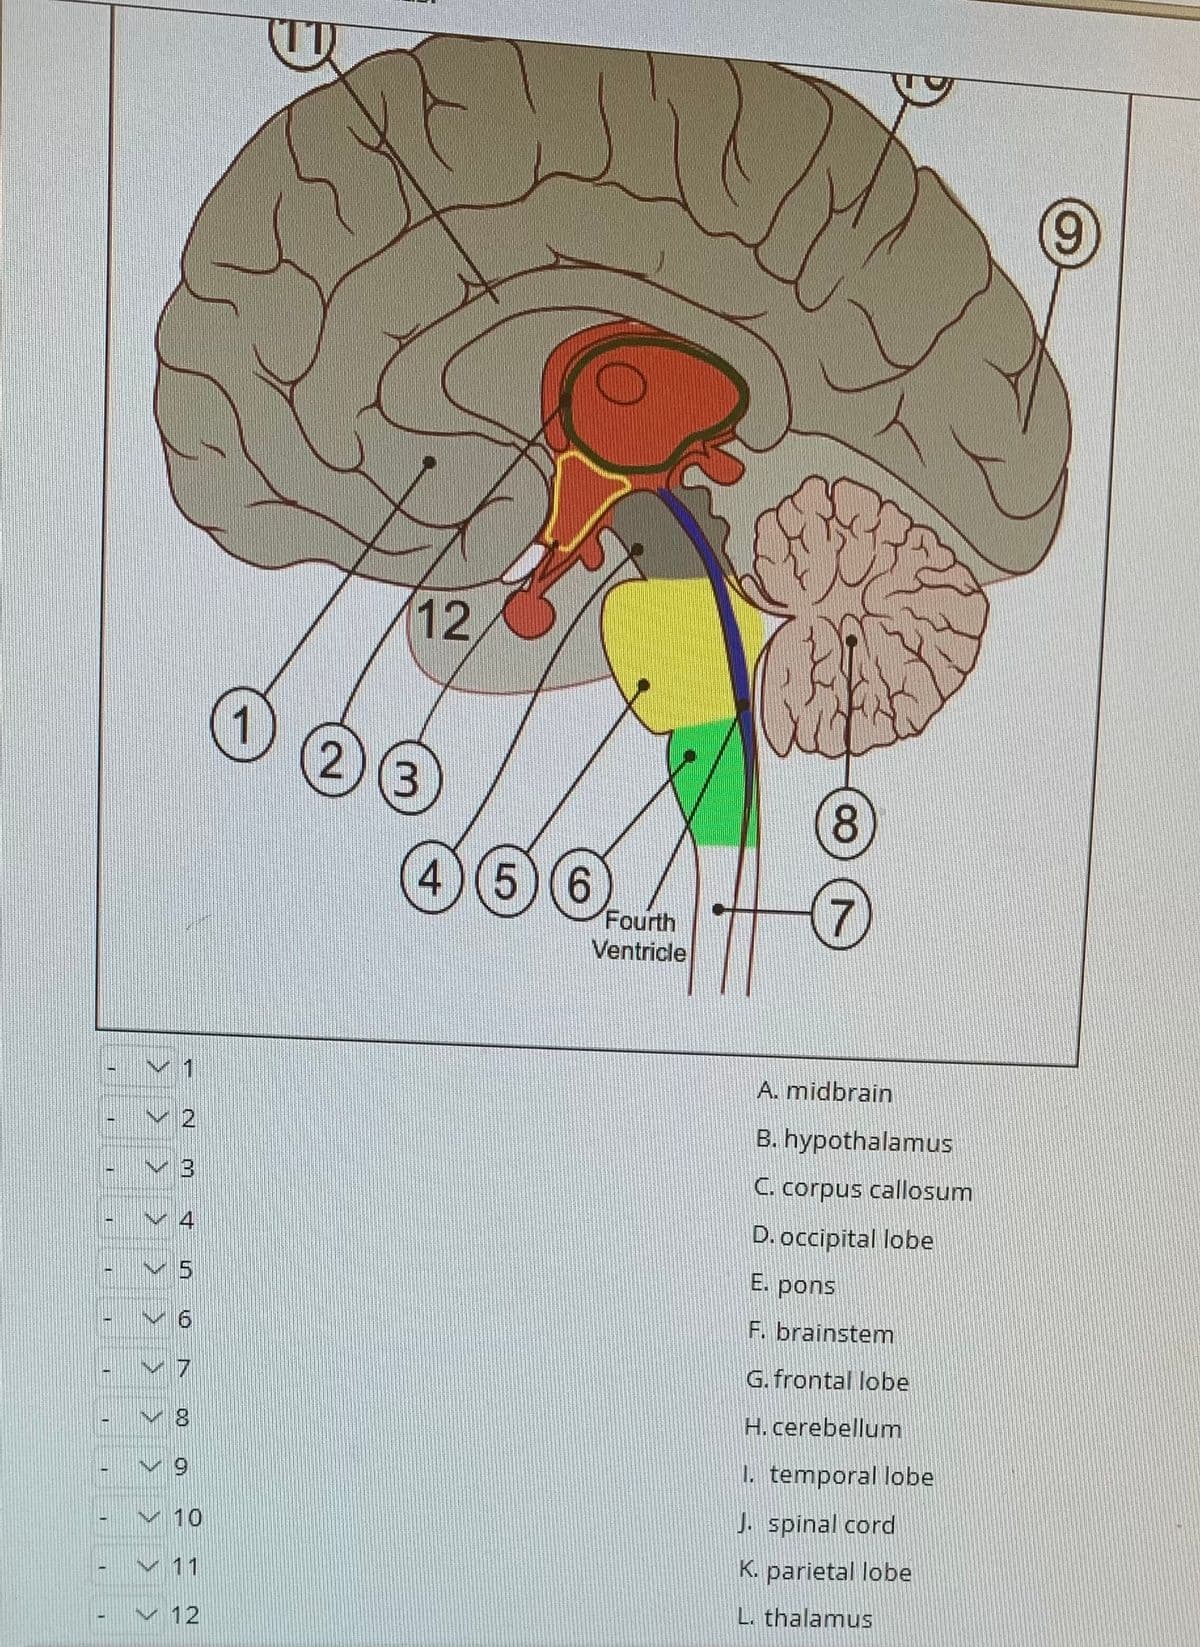 6.
12
2)(3
8.
4)(5)(6
Fourth
Ventricle
1
A. midbrain
v2
B. hypothalamus
C. corpus callosum
N4
D. occipital lobe
15
E. pons
F. brainstem
G. frontal lobe
H. cerebellum
6.
1. temporal lobe
v 10
J. spinal cord
V 11
K. parietal lobe
L. thalamus
12
CO
